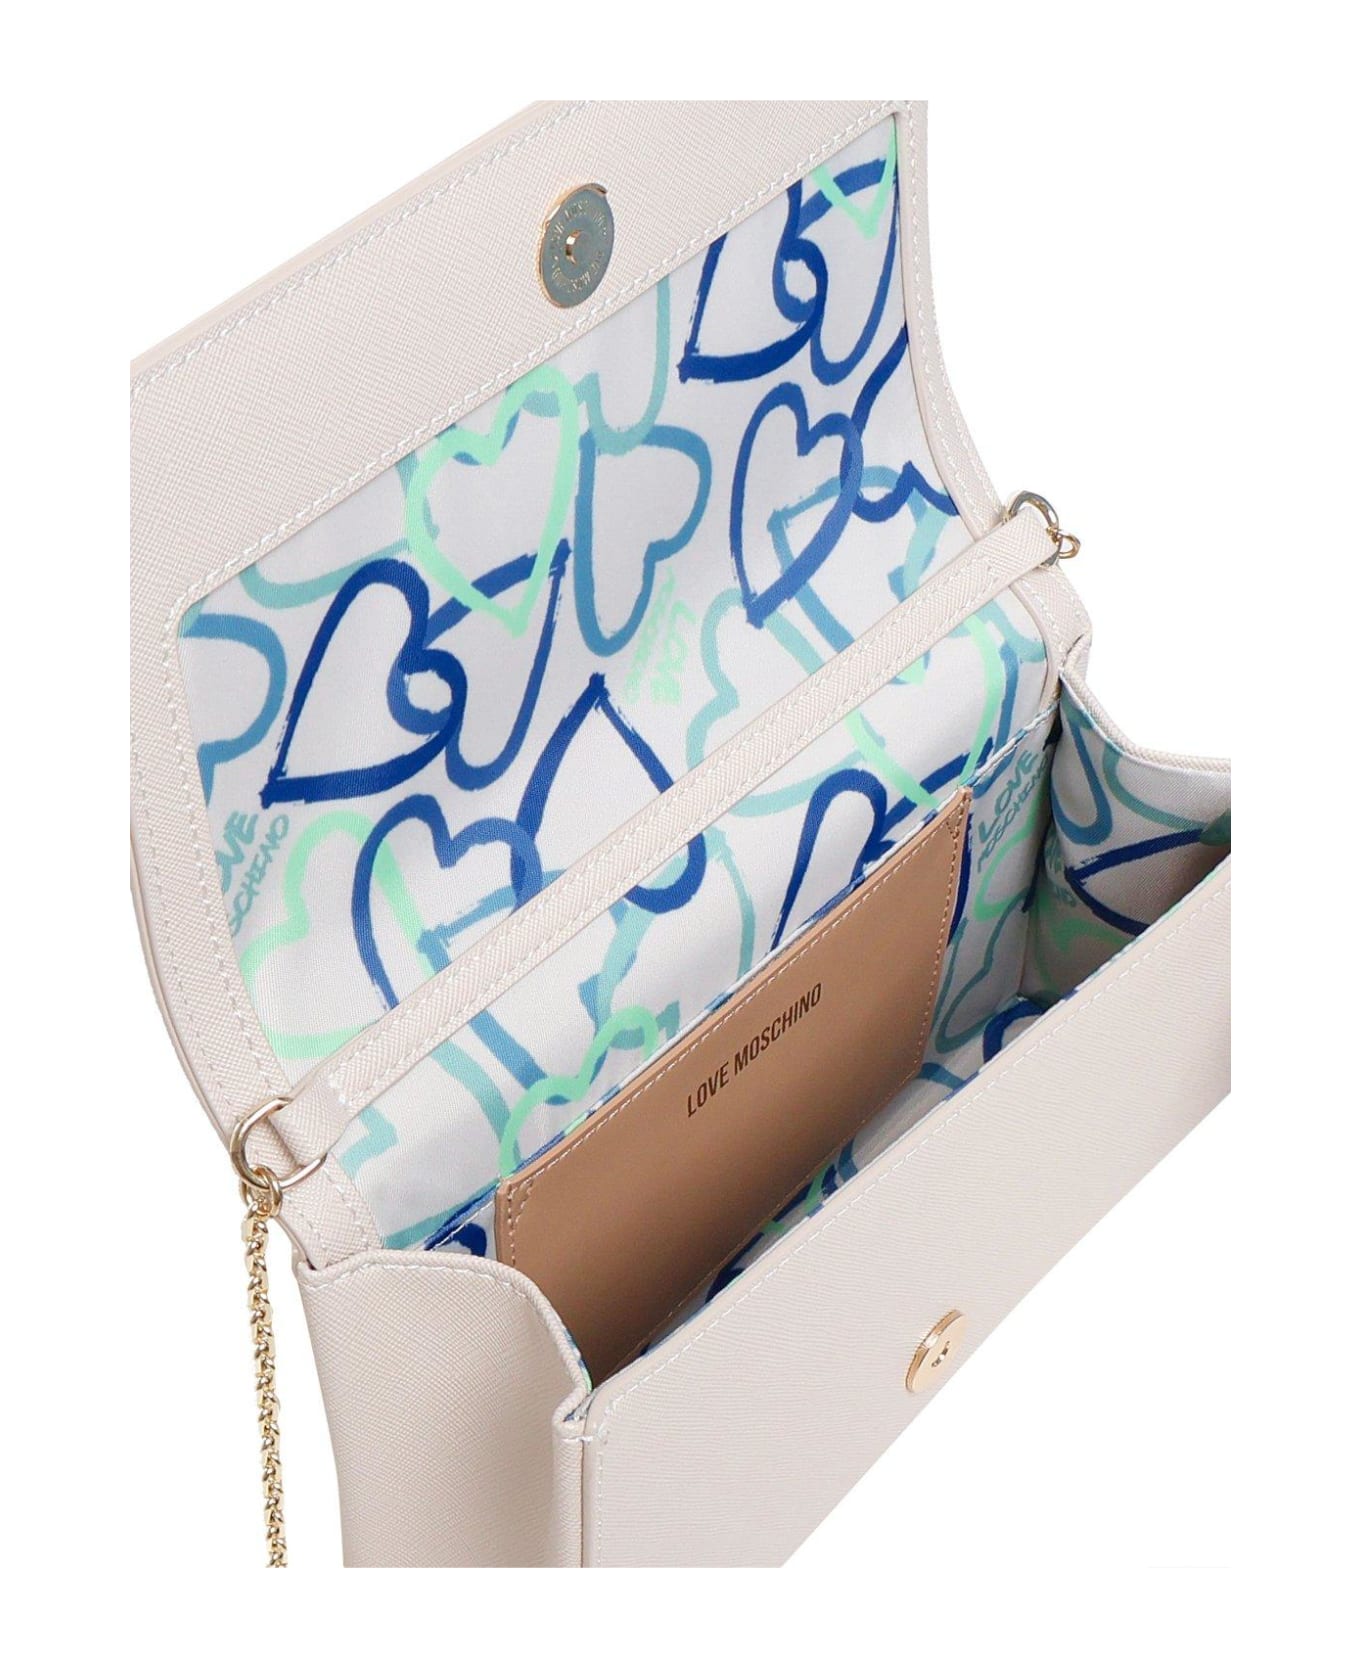 Love Moschino Logo Lettering Chain Linked Crossbody Bag - Fantasy color ショルダーバッグ